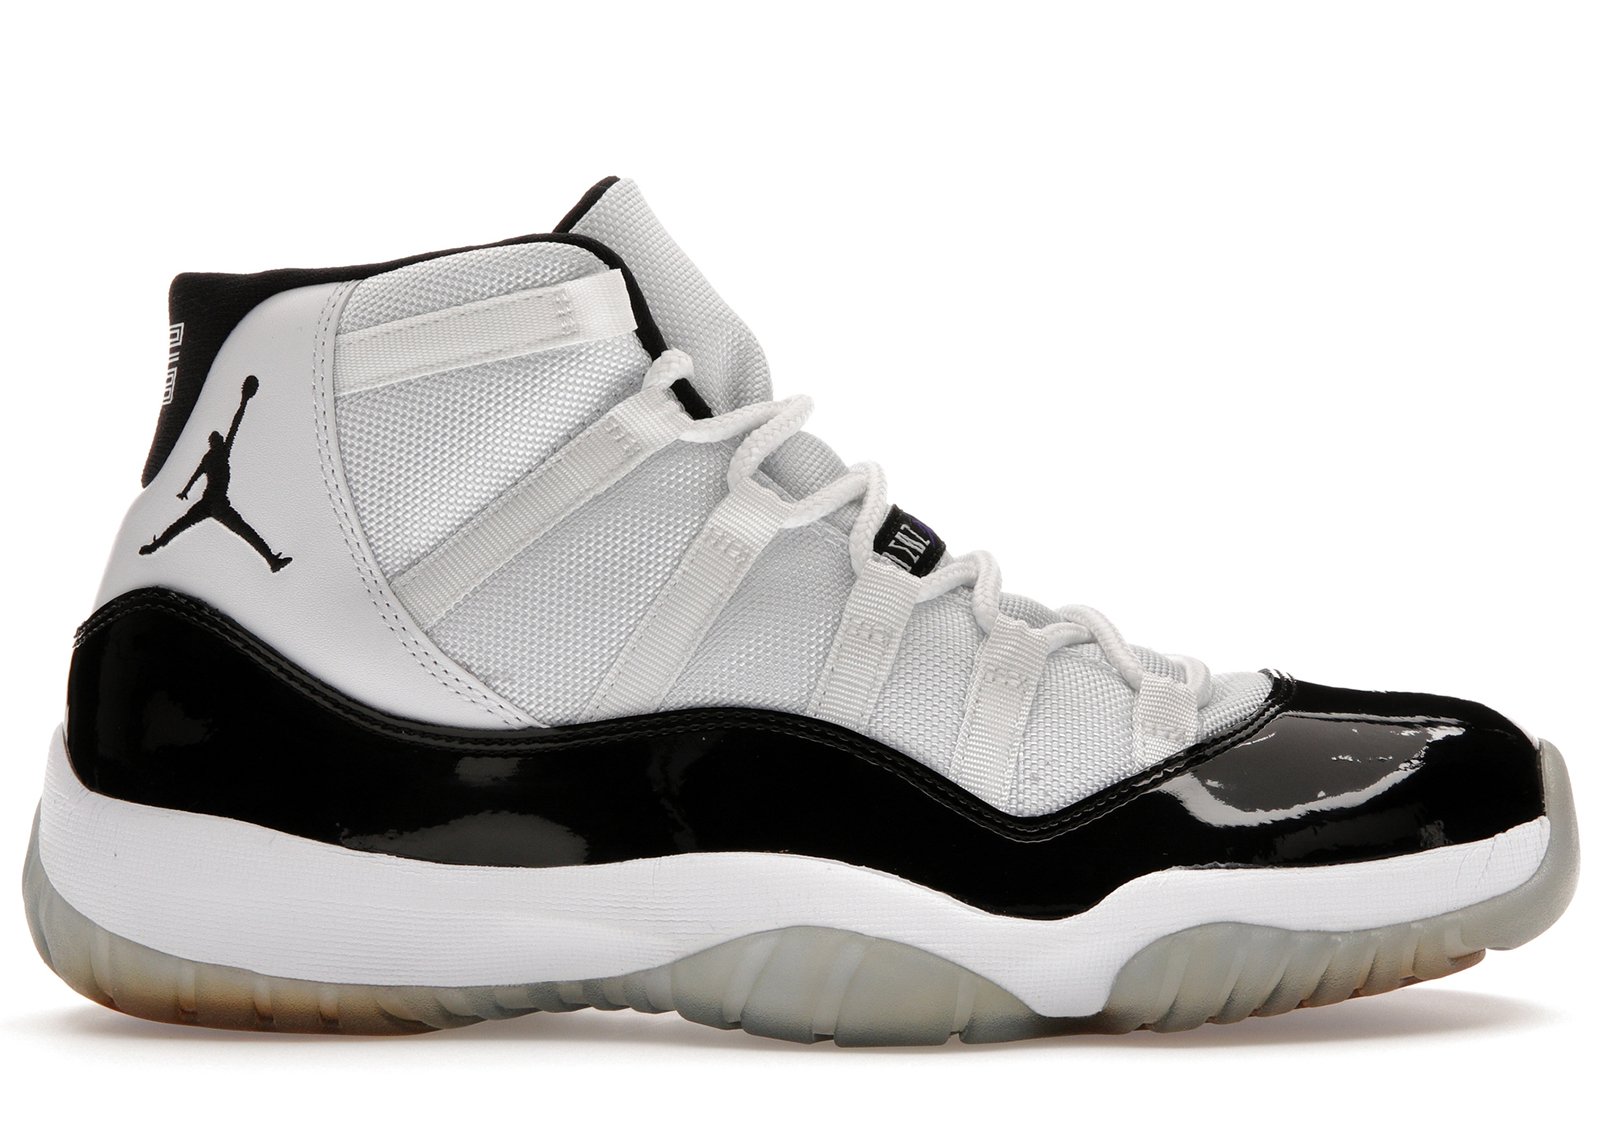 Jordan 11 Retro Concord (2011) sneakers